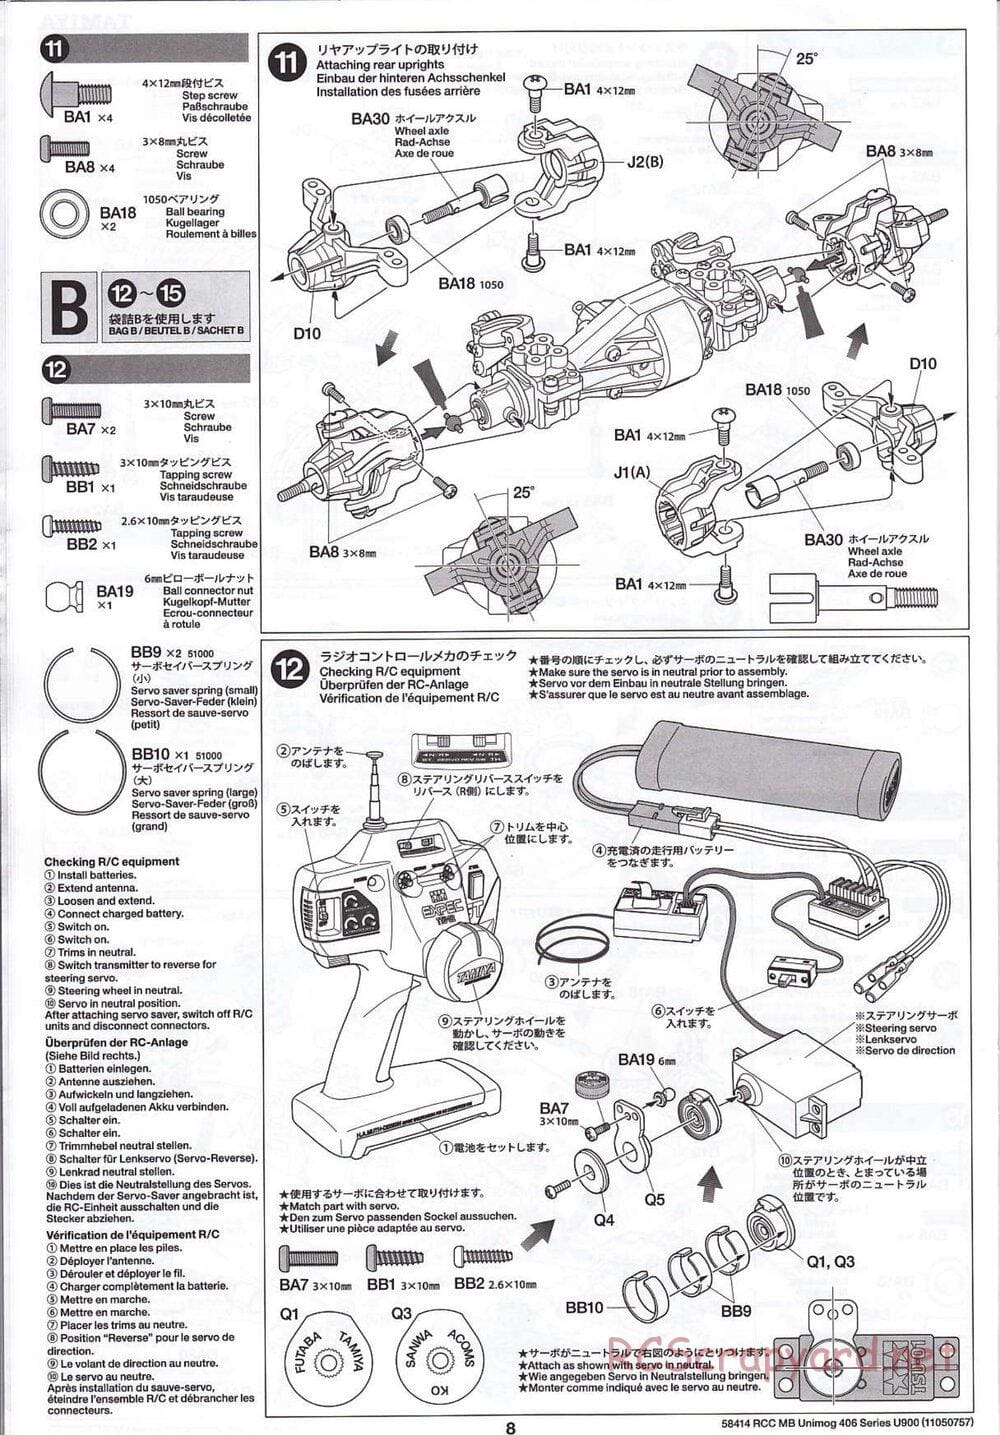 Tamiya - Mercedes-Benz Unimog 406 Series U900 - CR-01 Chassis - Manual - Page 8